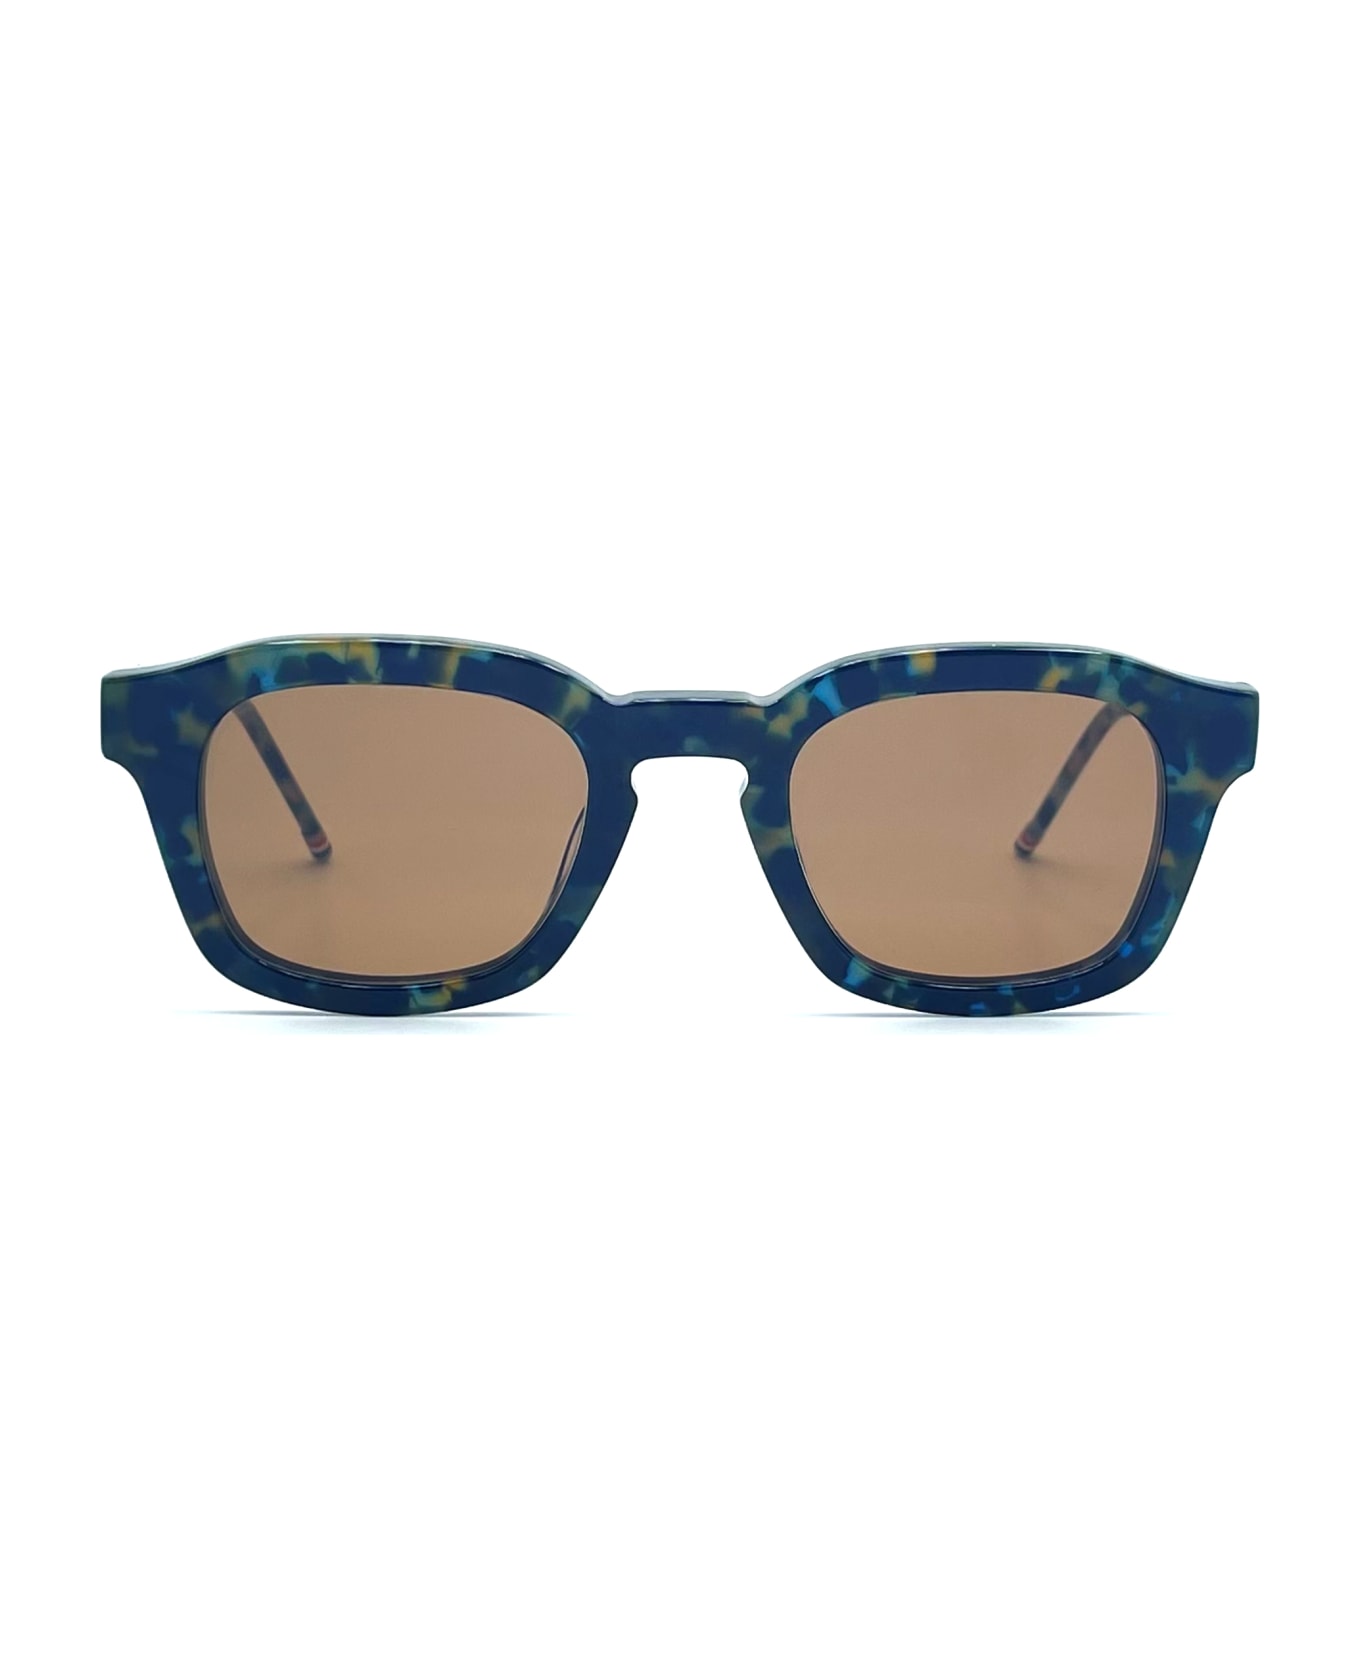 Thom Browne Rectangular - Navy Melange Sunglasses - navy blue